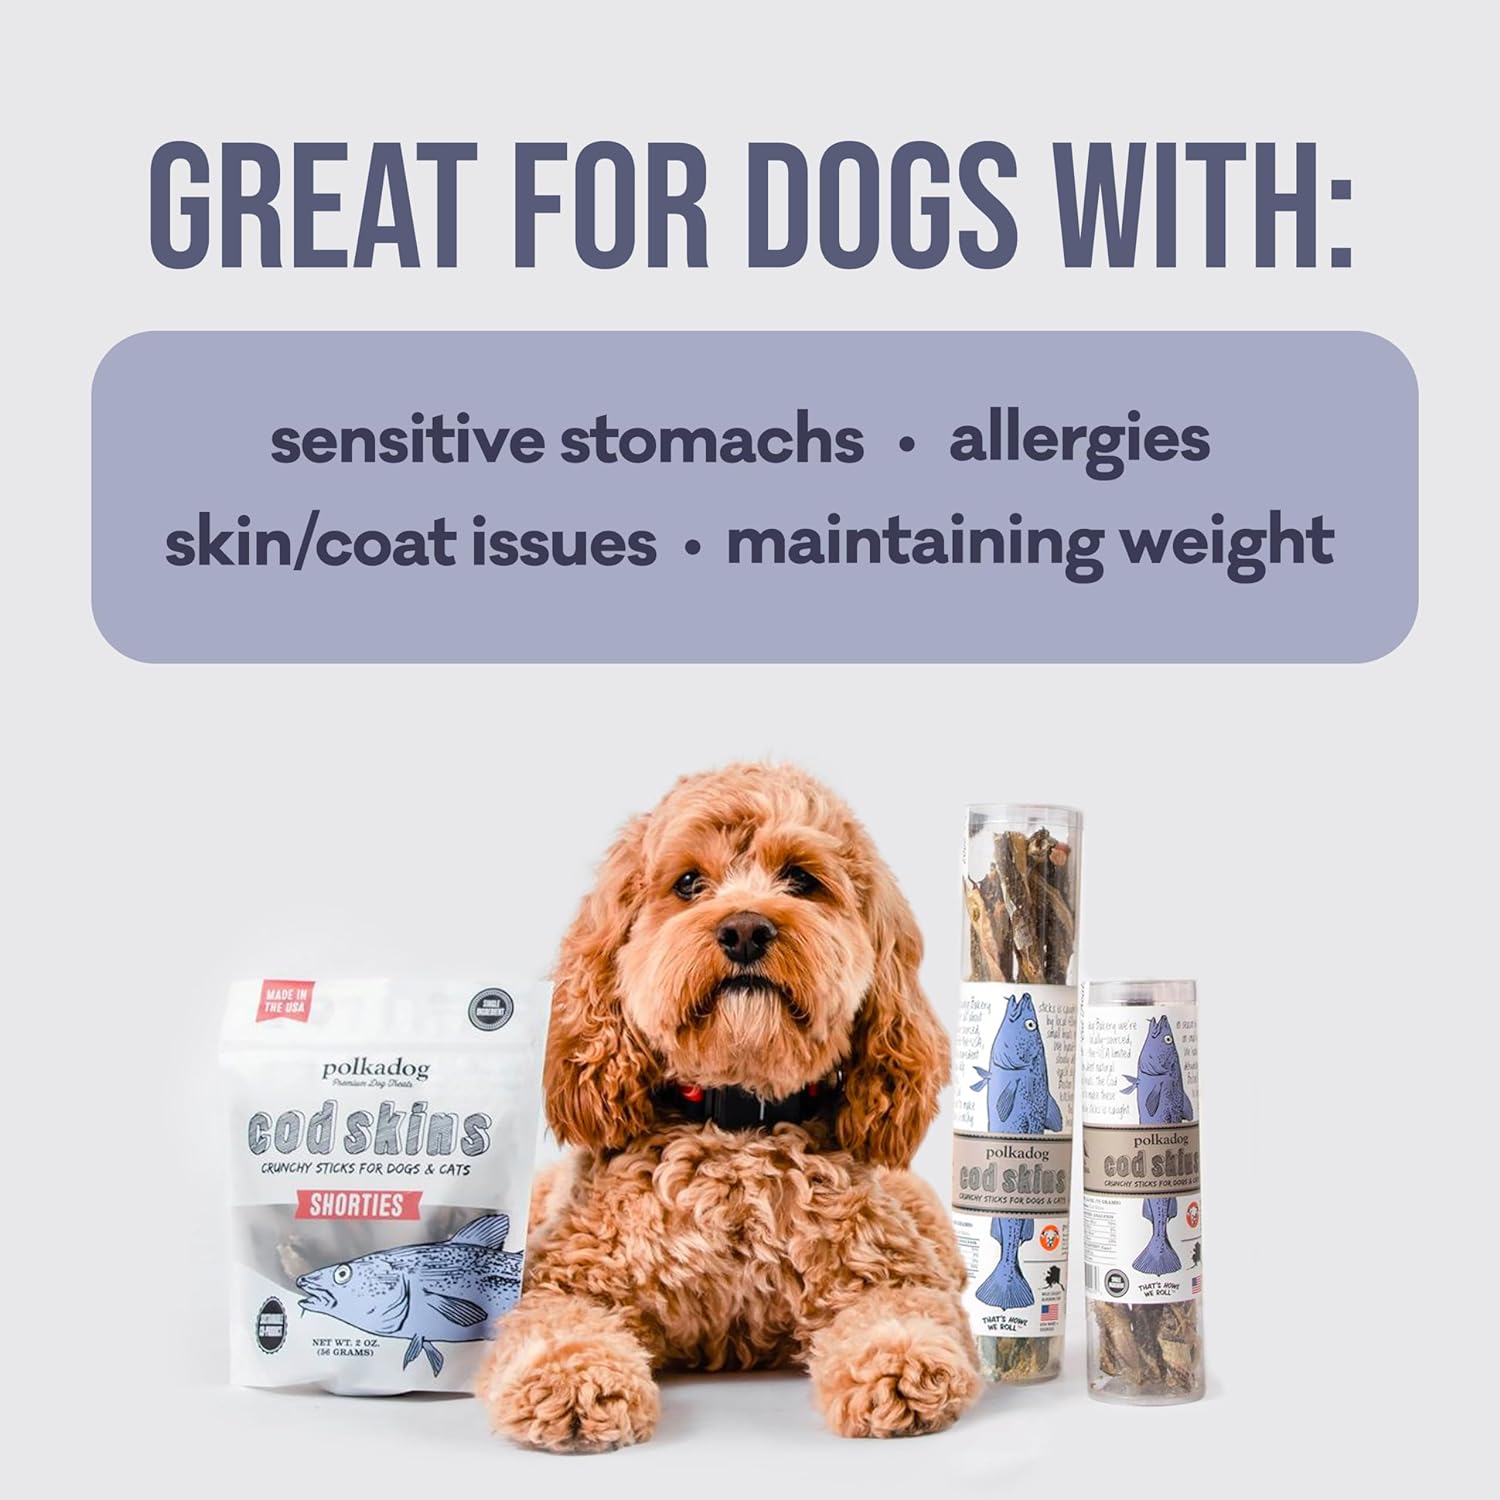 Polkadog Cod Skins Dog Treat - Lean Protein, Made in USA, Single-Ingredient, Grain & Gluten Free, for All Breeds - Crunchy Fish Skin Treat for Teeth Health, 4.7oz Regular : Pet Snack Treats : Pet Supplies